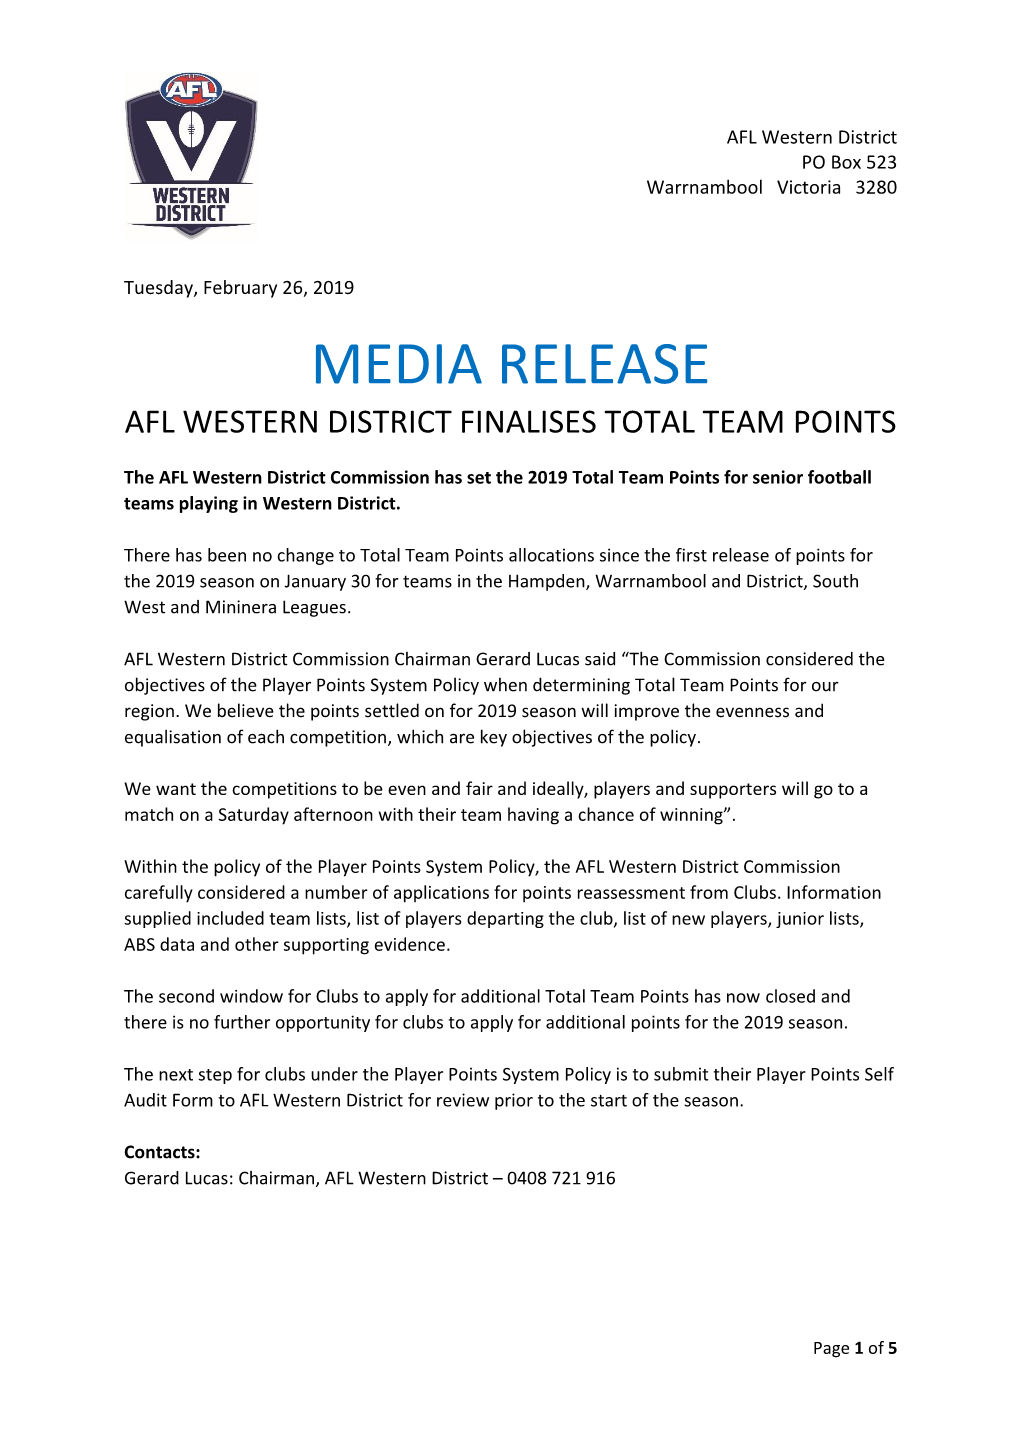 Media Release Afl Western District Finalises Total Team Points